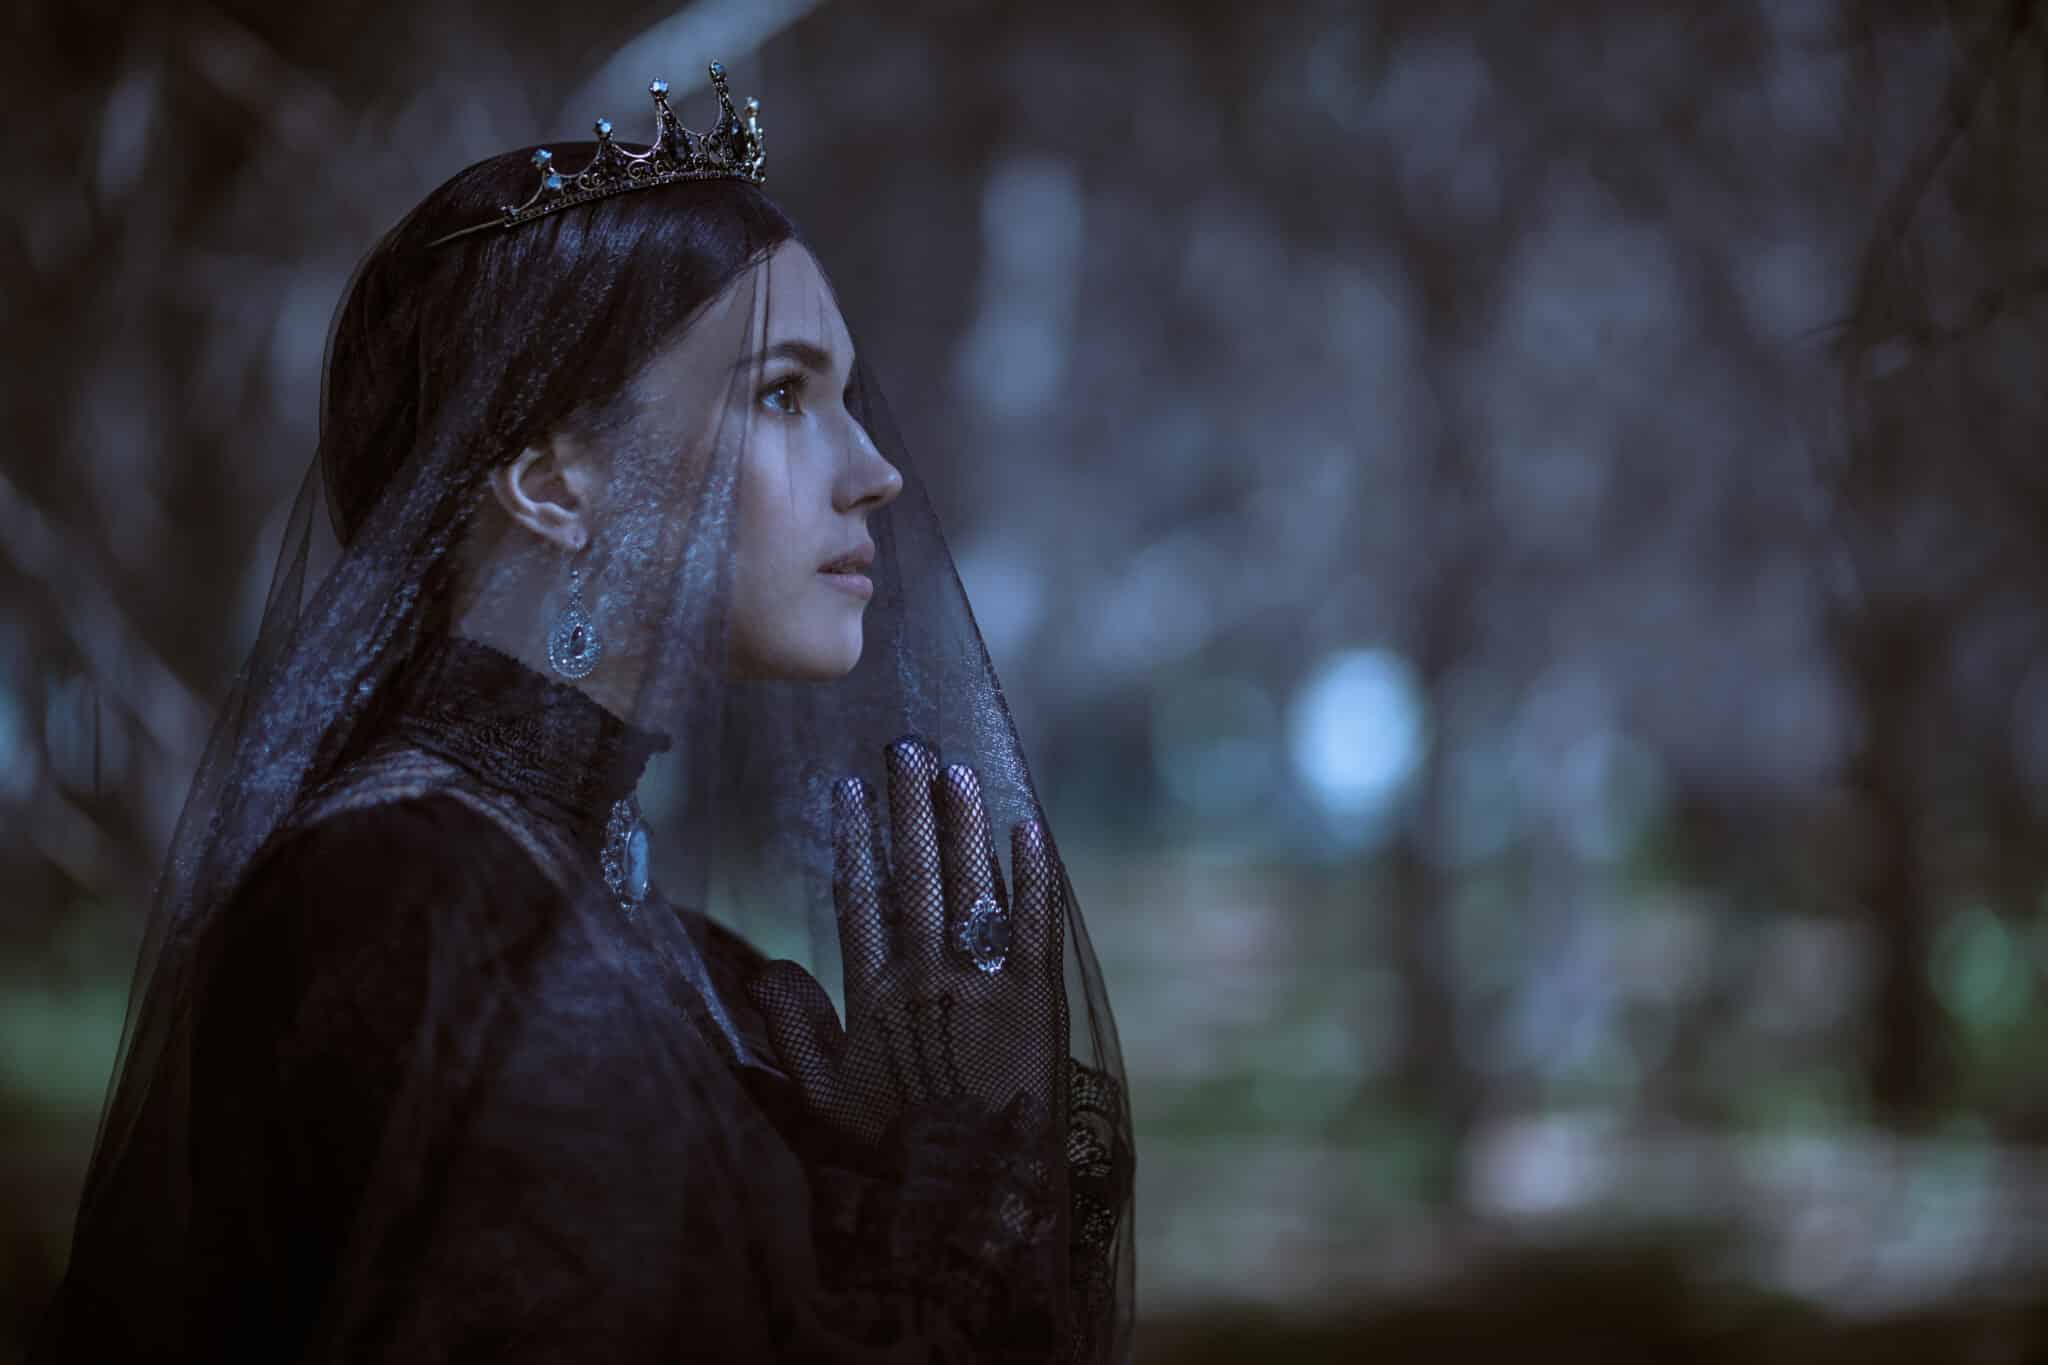 sorrowful princess in black dress with veil